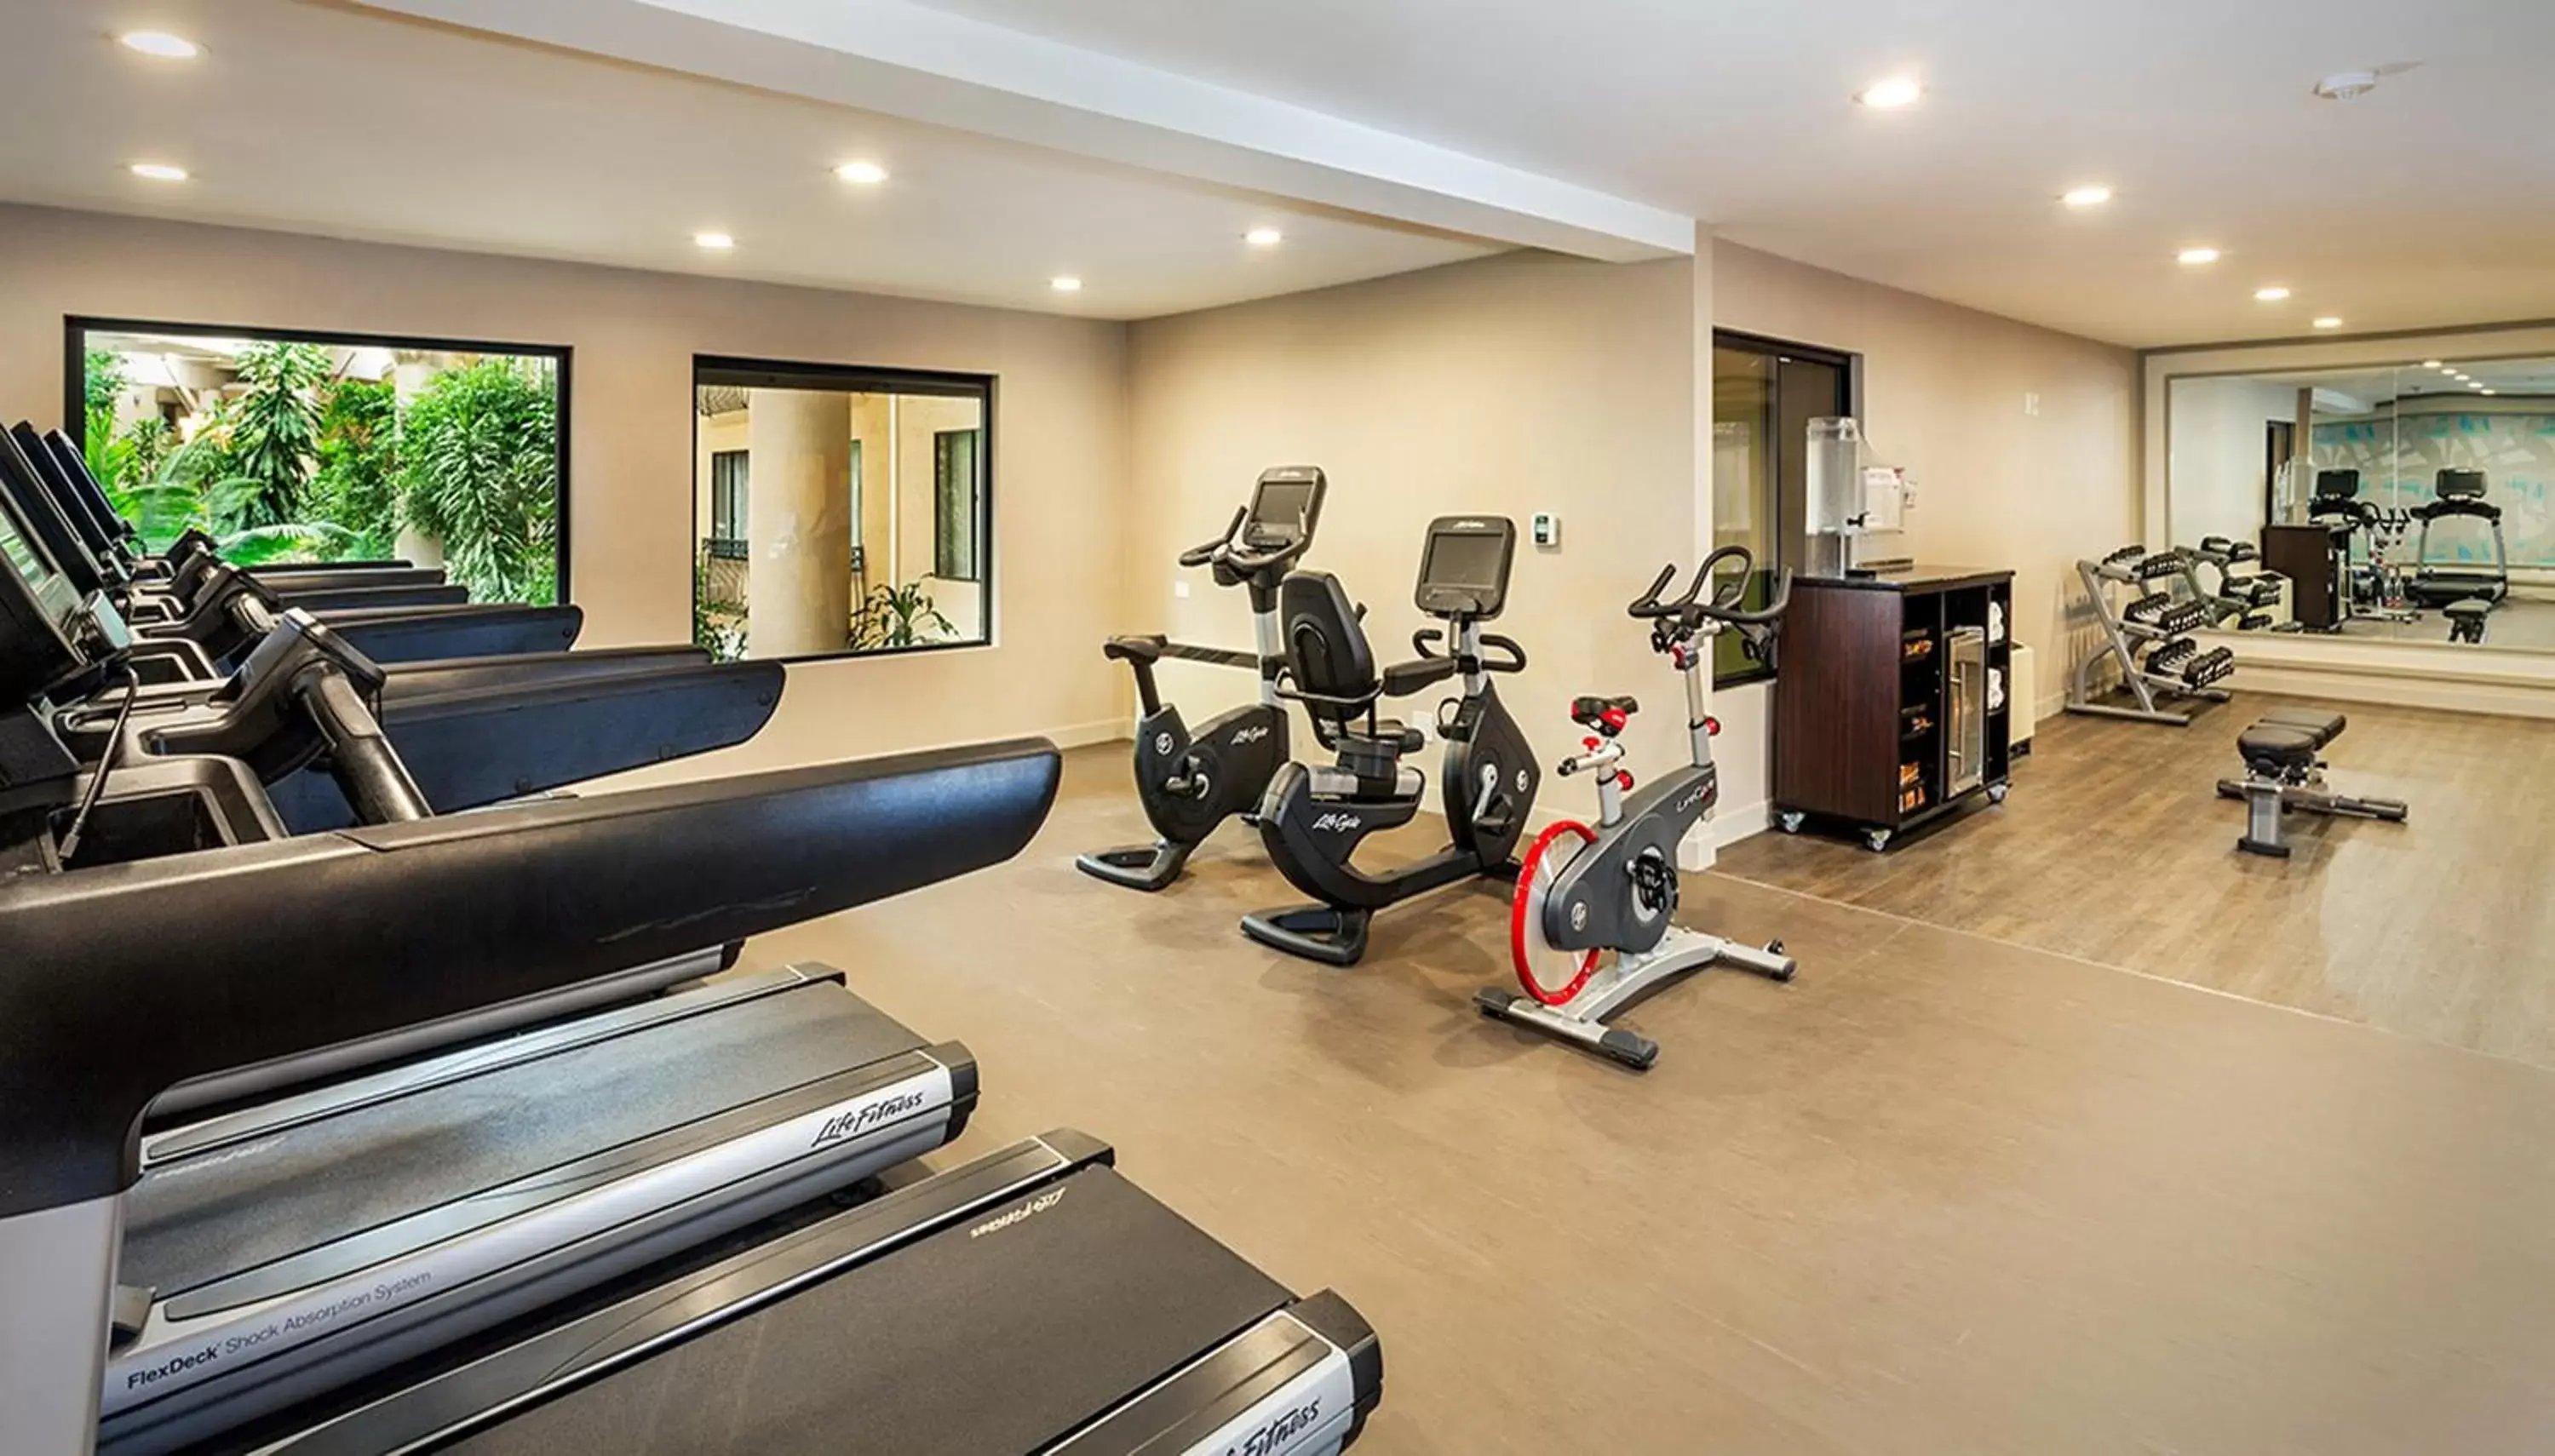 Fitness centre/facilities, Fitness Center/Facilities in Concord Plaza Hotel